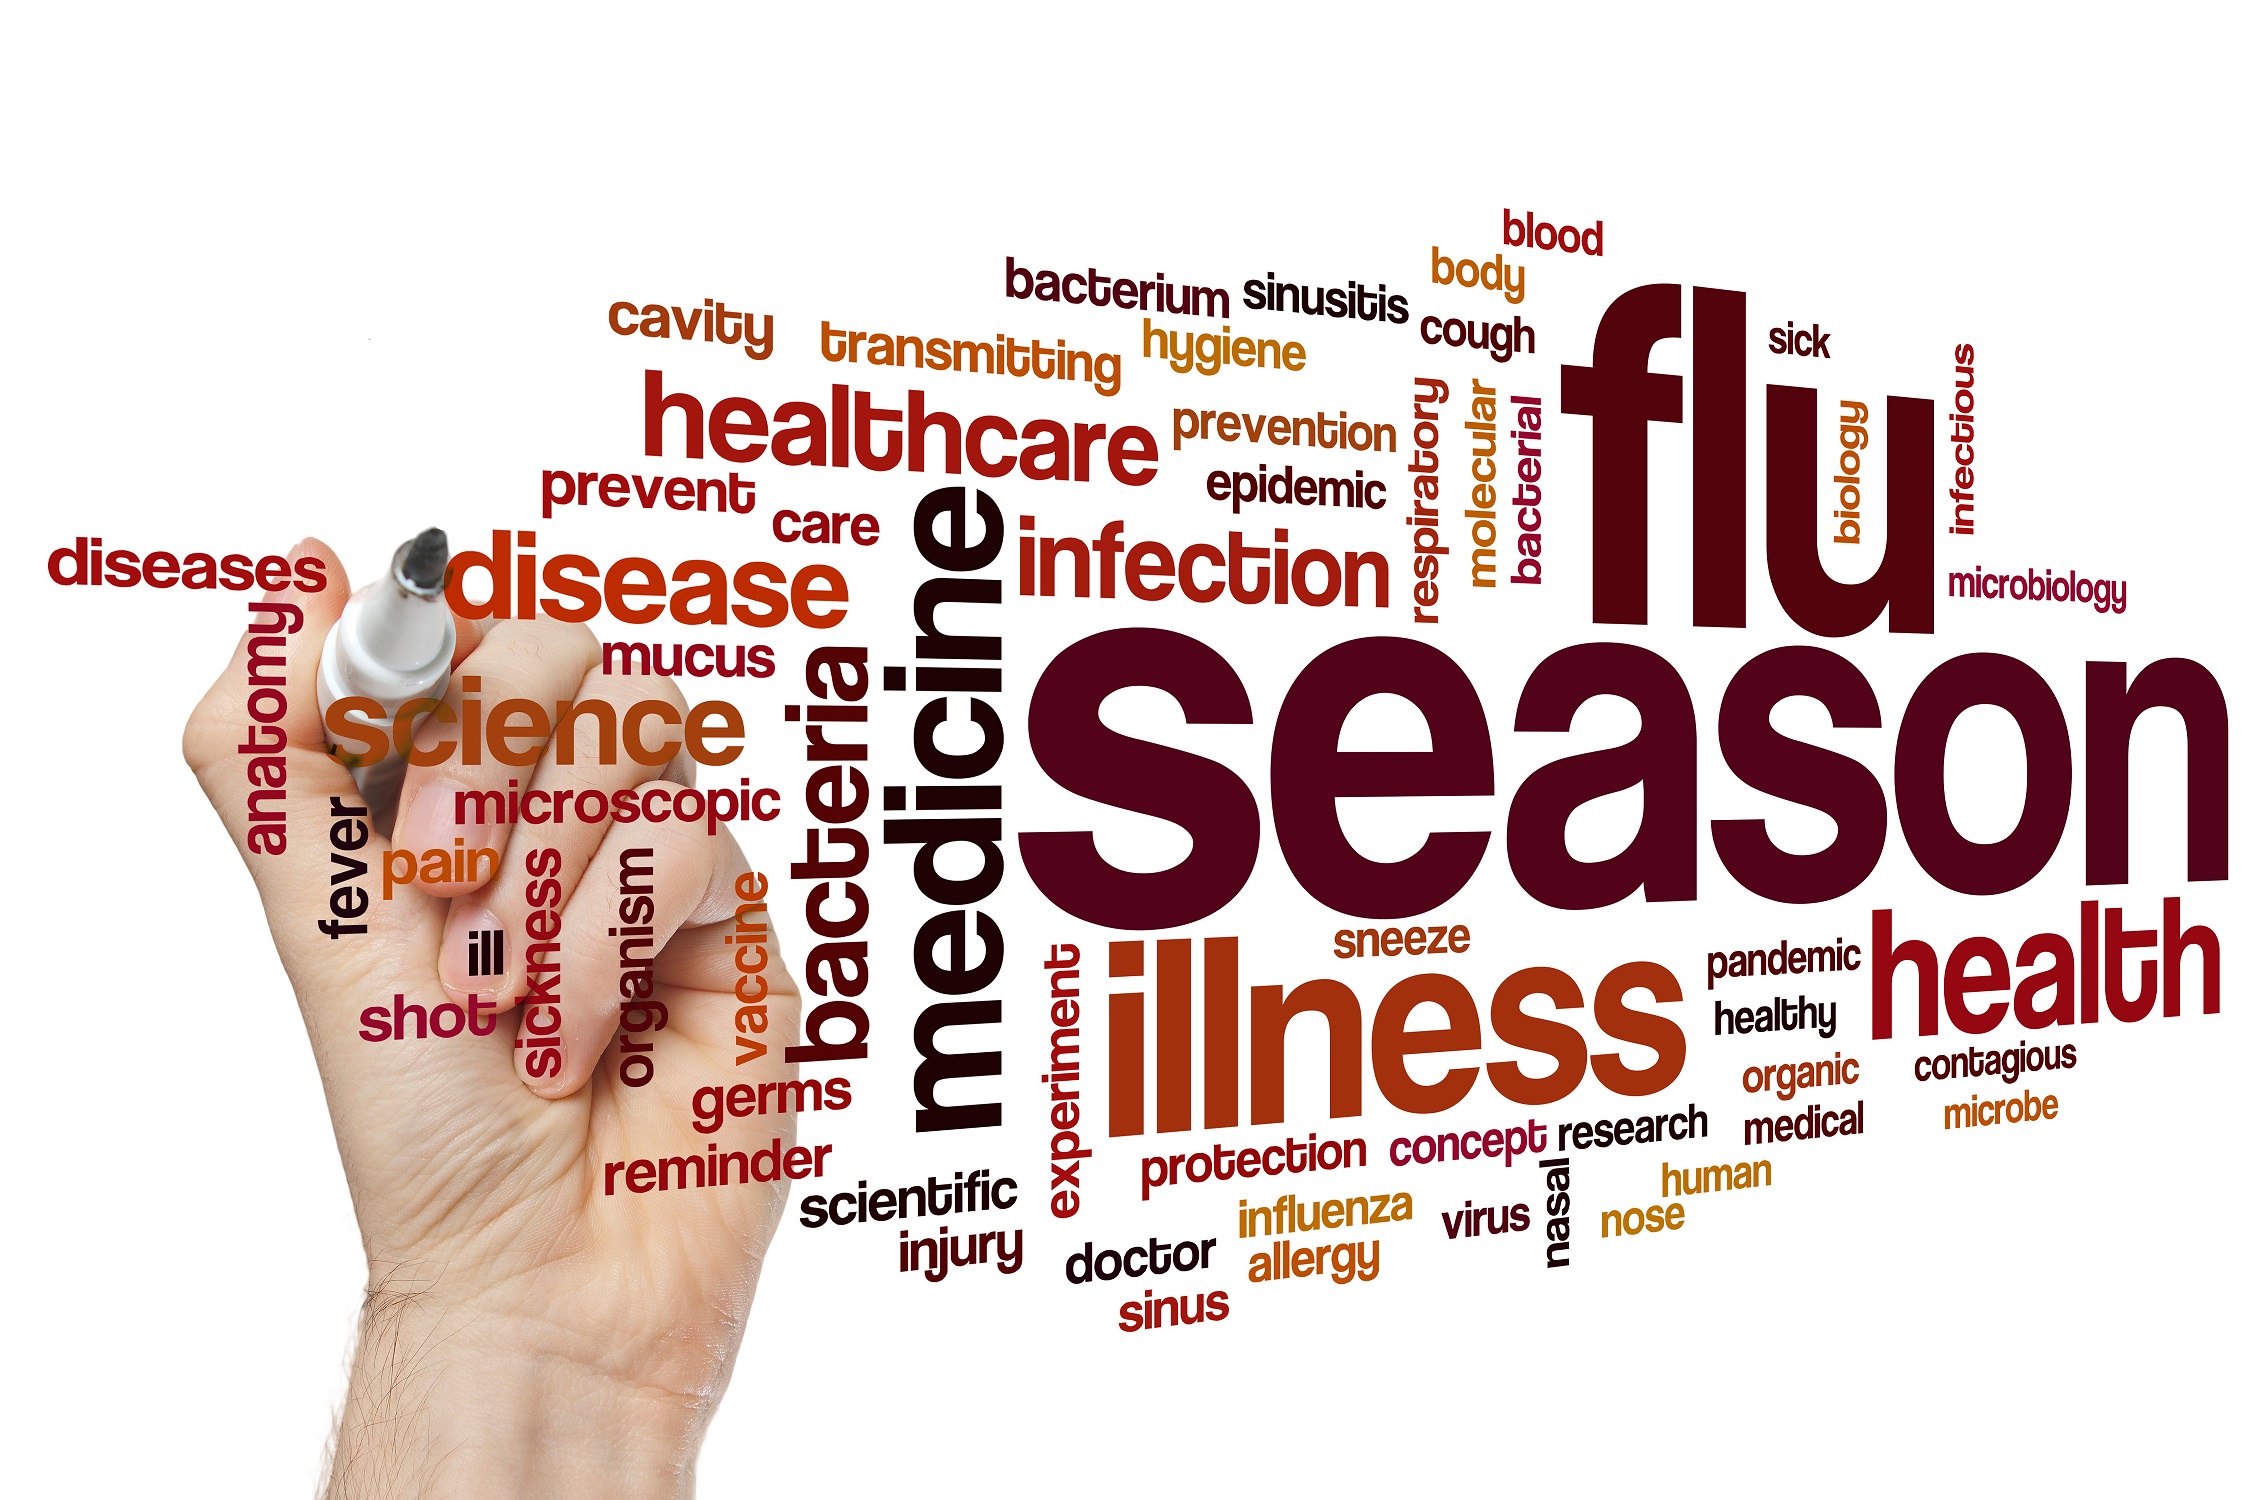 Flu season word cloud concept